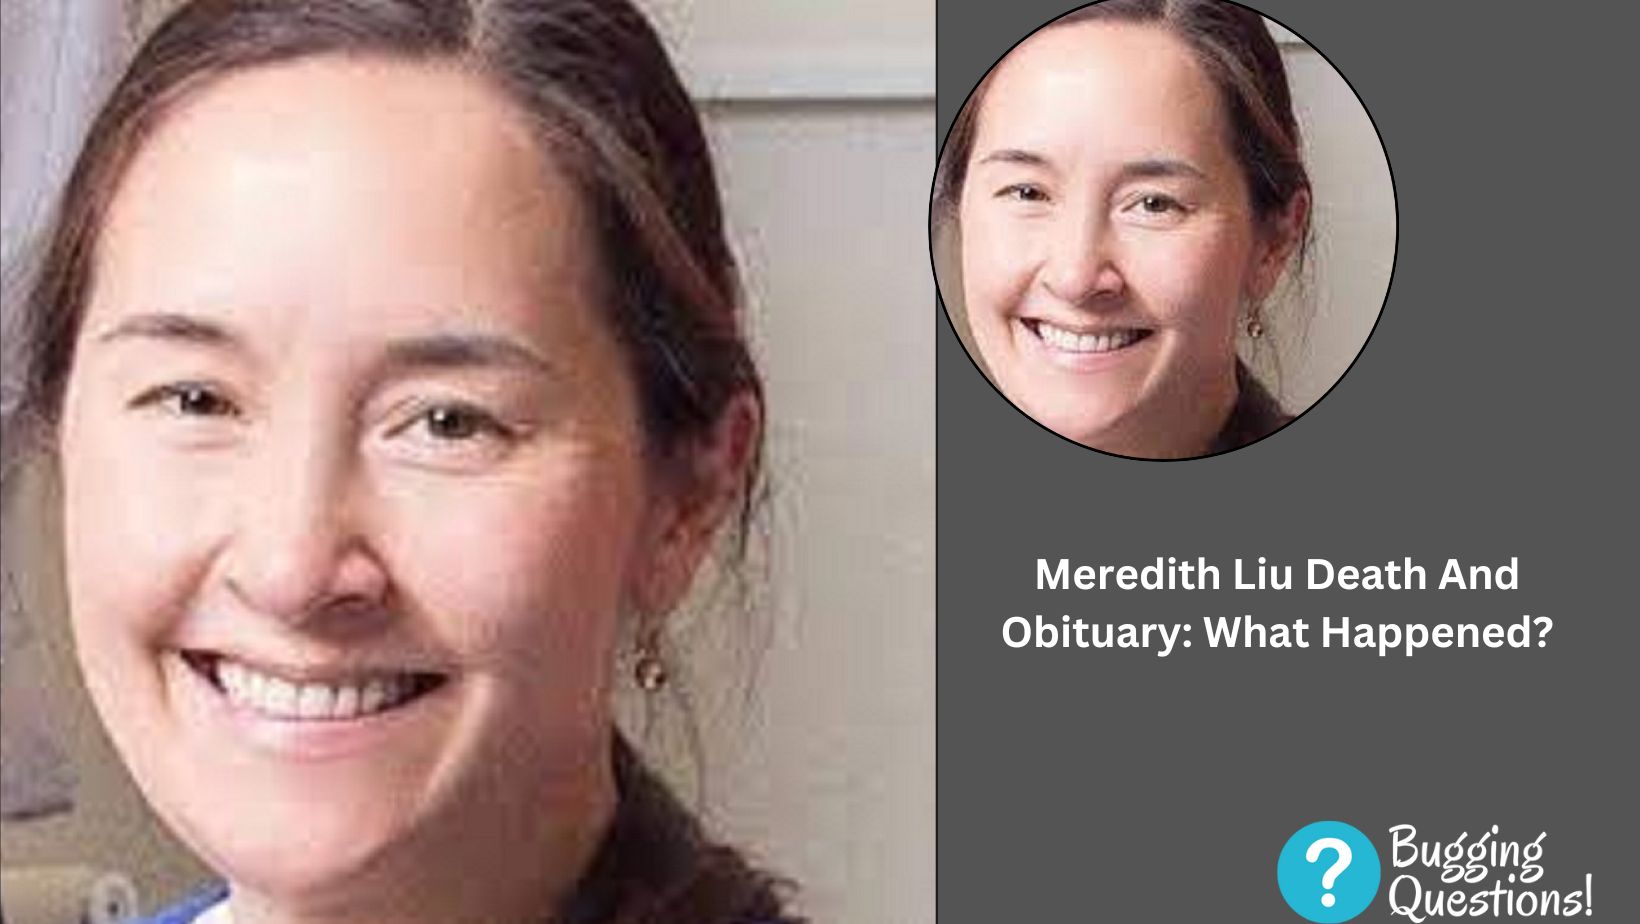 Meredith Liu Death And Obituary: What Happened?